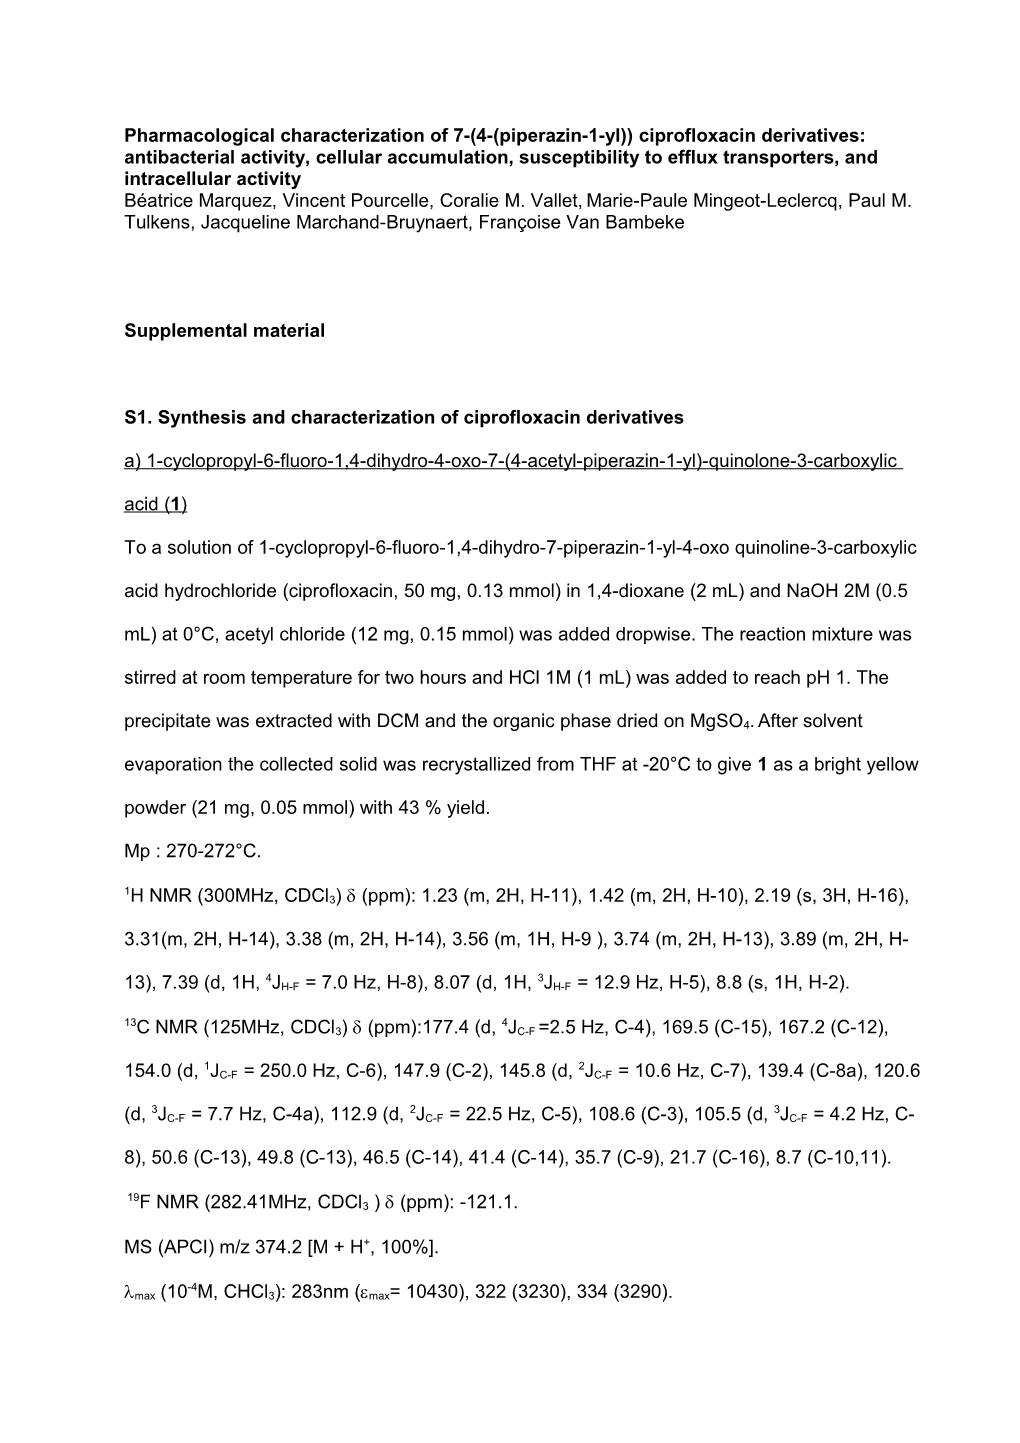 Pharmacological Characterization of 7-(4-(Piperazin-1-Yl)) Ciprofloxacin Derivatives